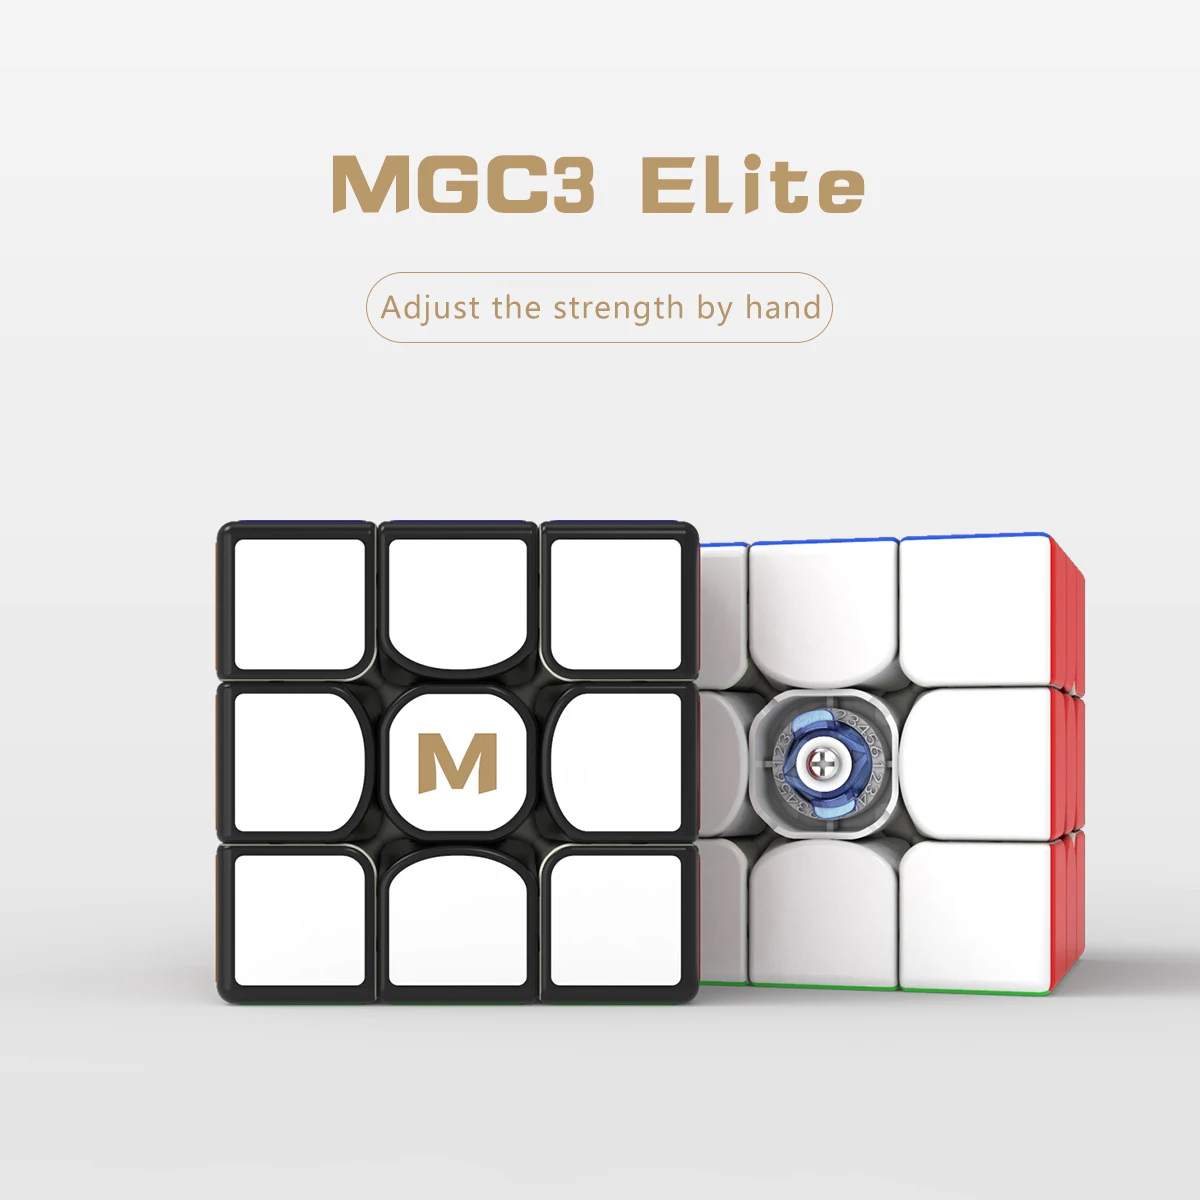 YongJun 3x3x3 cube MGC3 Elite Магнитный 3x3x3 магический куб yongjun MGC V3 3x3x3 Магнитный скоростной куб MGC Elite 3x3 куб-головоломка